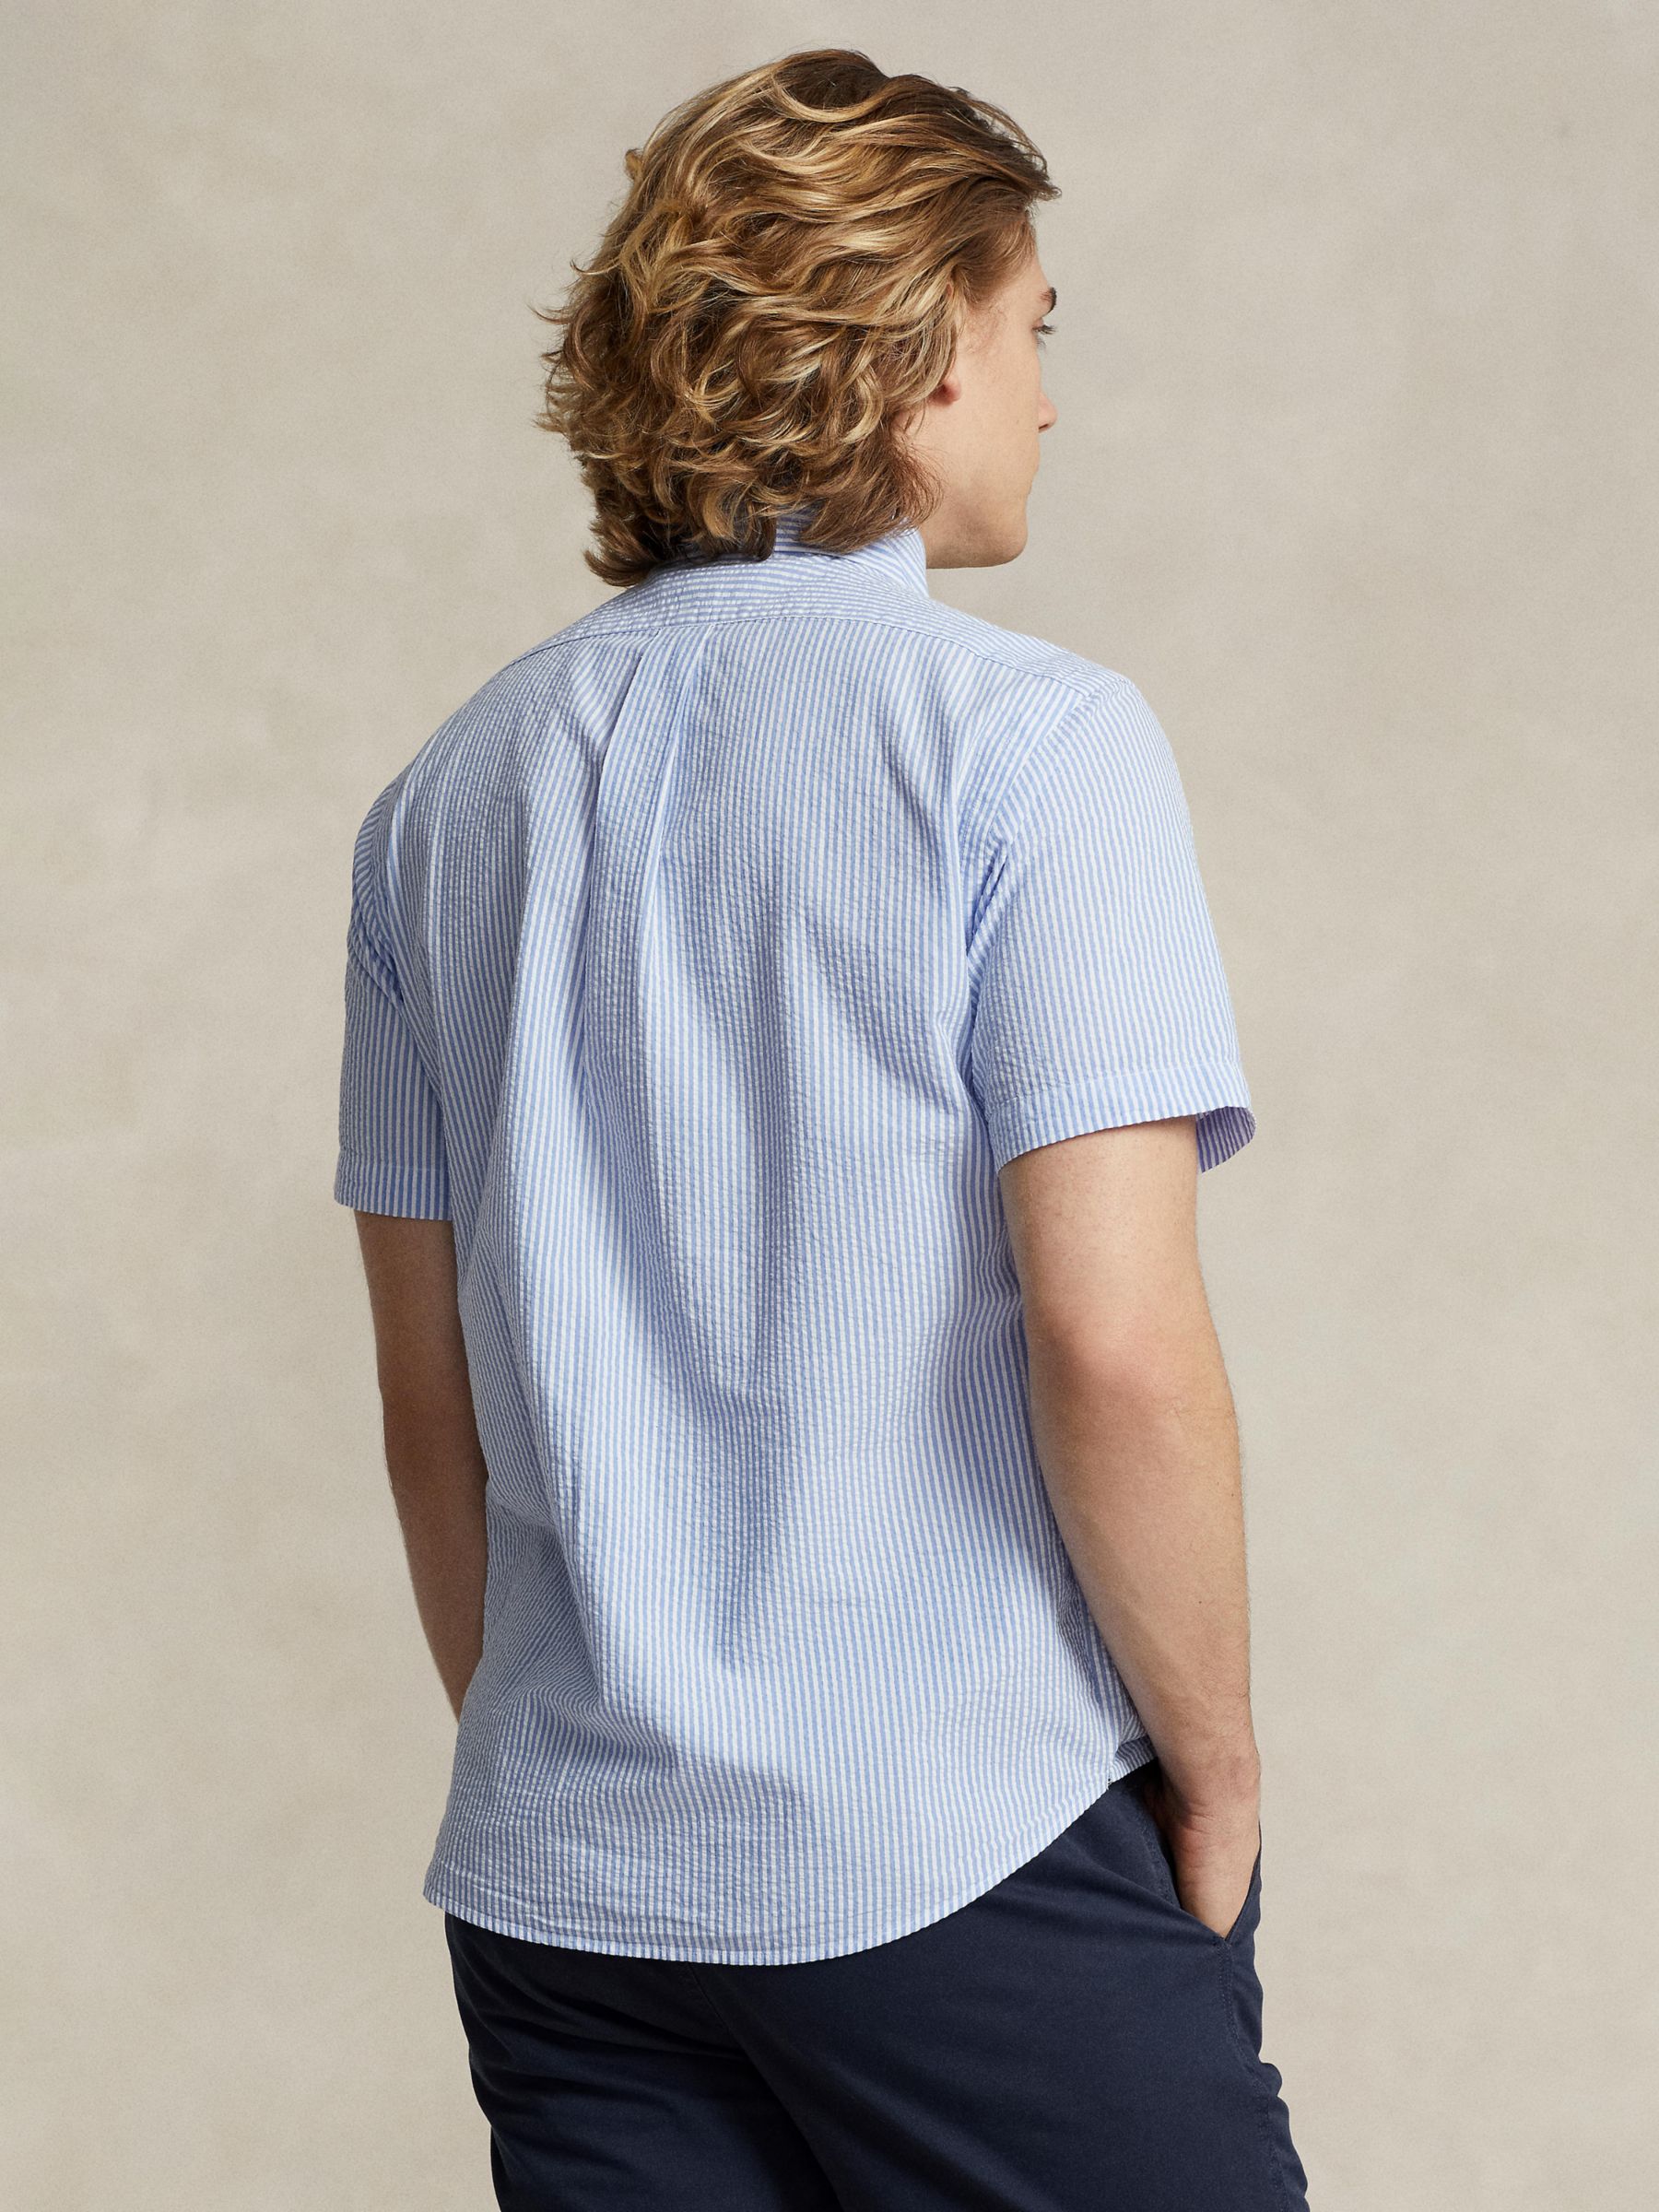 Ralph Lauren Custom Fit Striped Seersucker Shirt, Blue/White, M